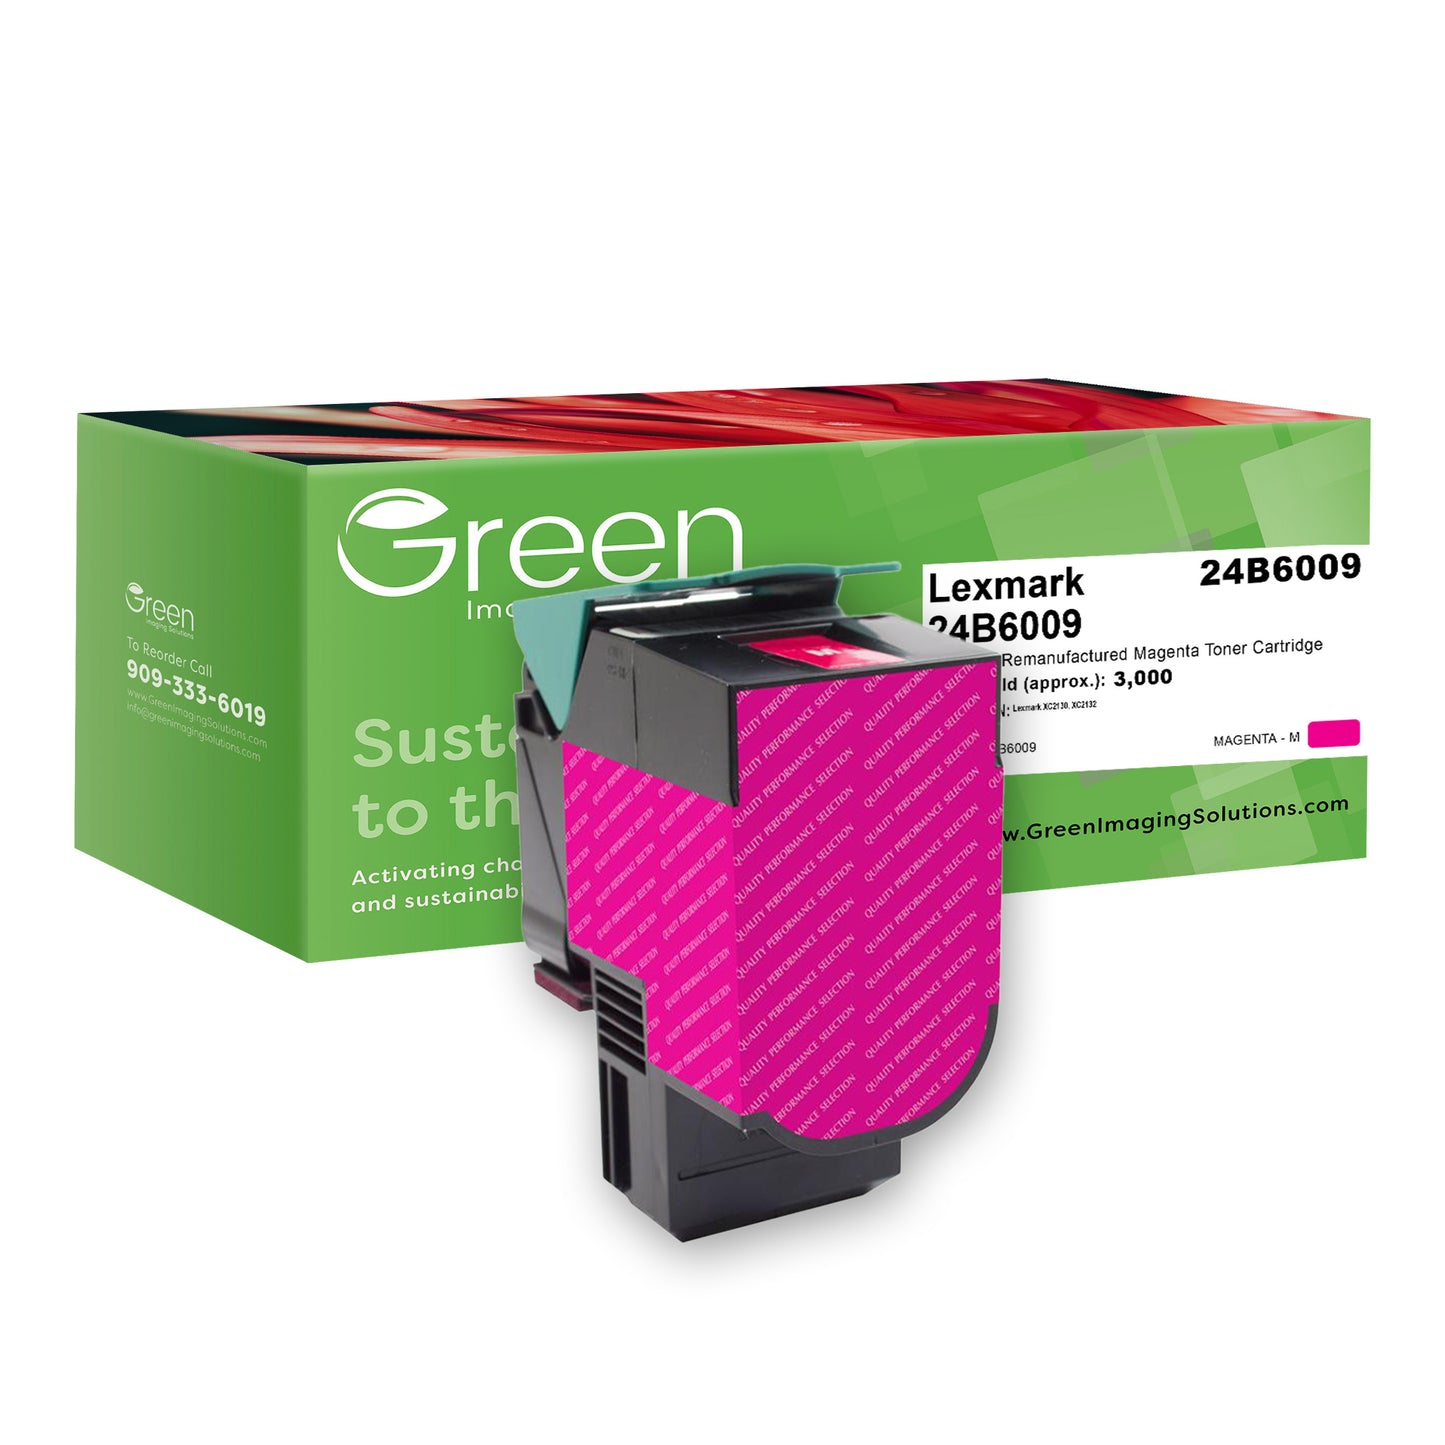 Green Imaging Solutions USA Remanufactured Magenta Toner Cartridge for Lexmark XC2130